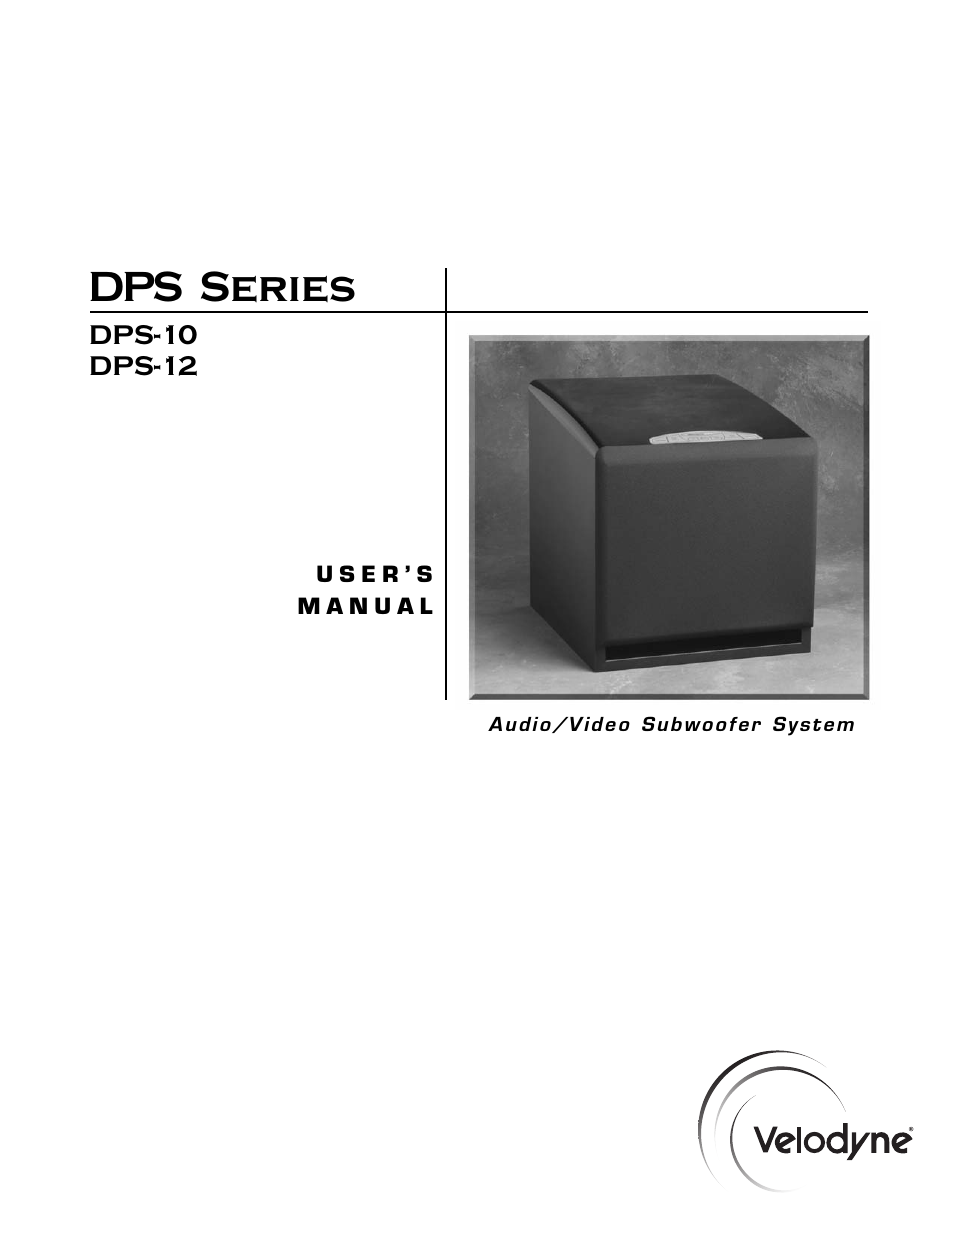 DPS SERIES DPS-12